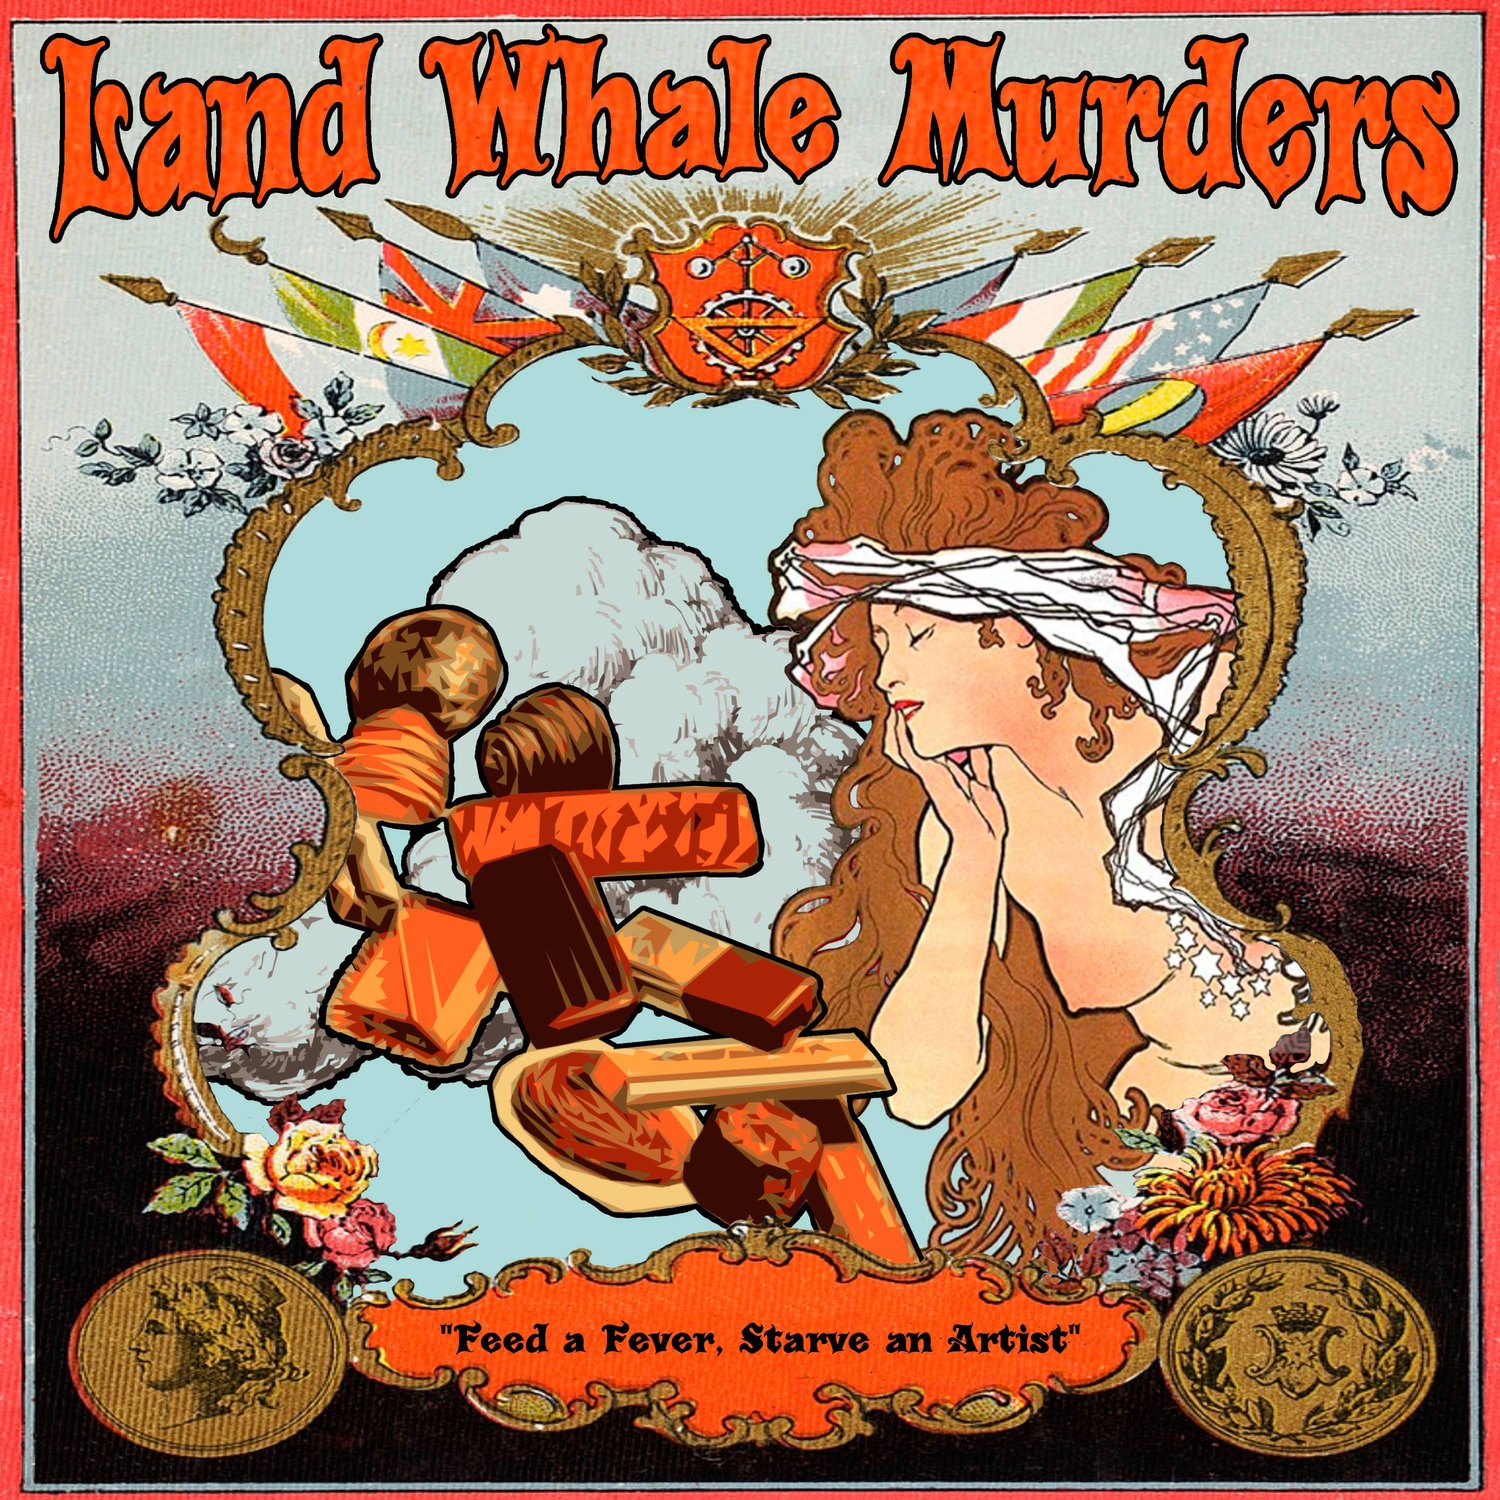 Land Whale Murders